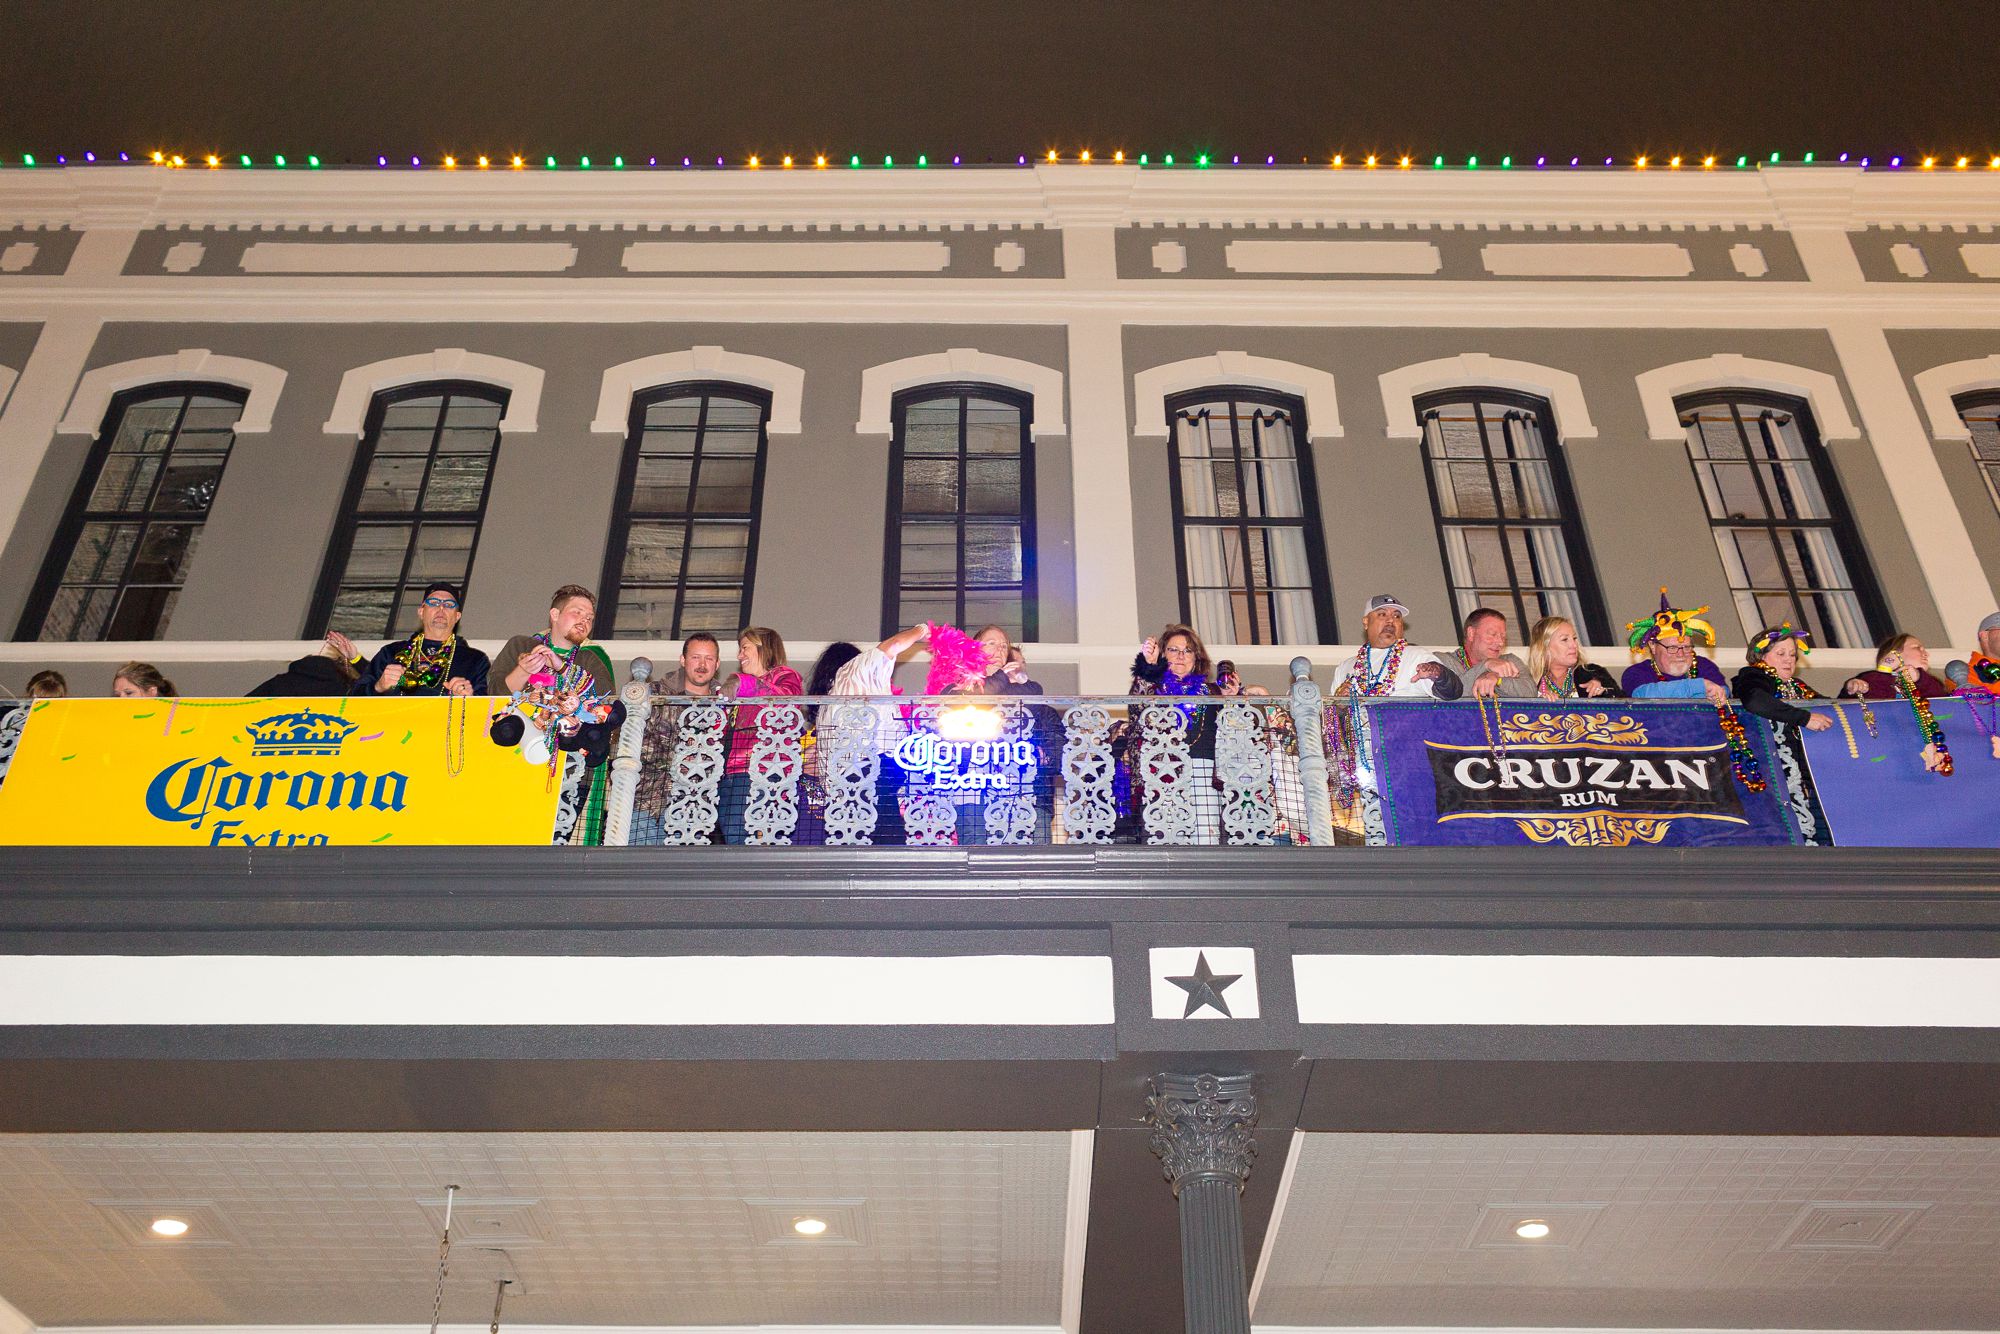 Mardi Gras Galveston balcony party with bead throwing